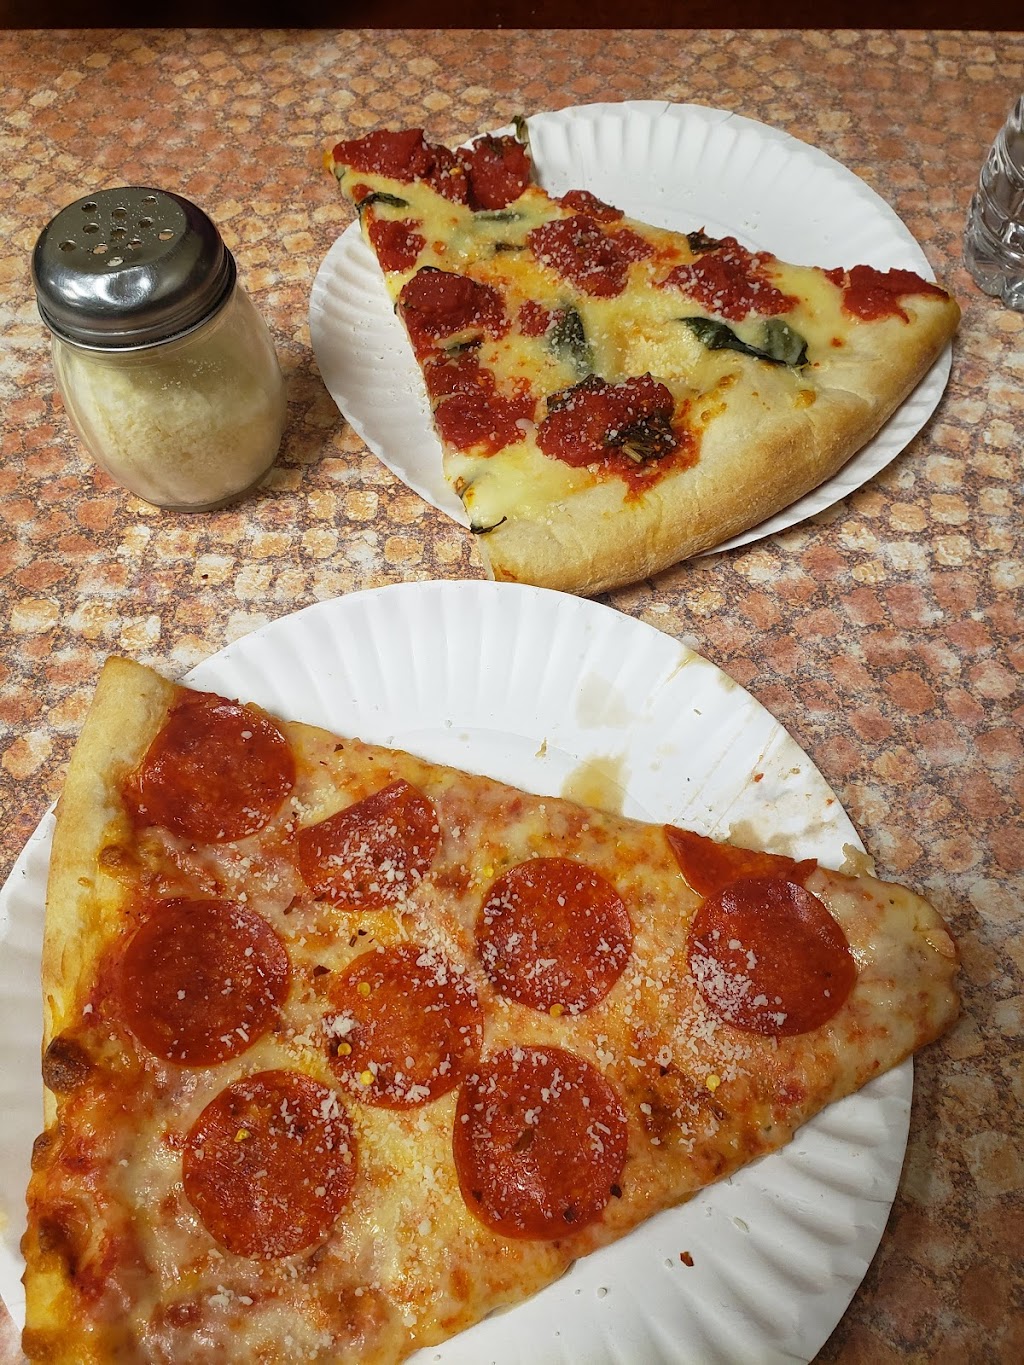 Pudgys Pizza & Pasta | 66 Main St, Pine Bush, NY 12566 | Phone: (845) 744-2800